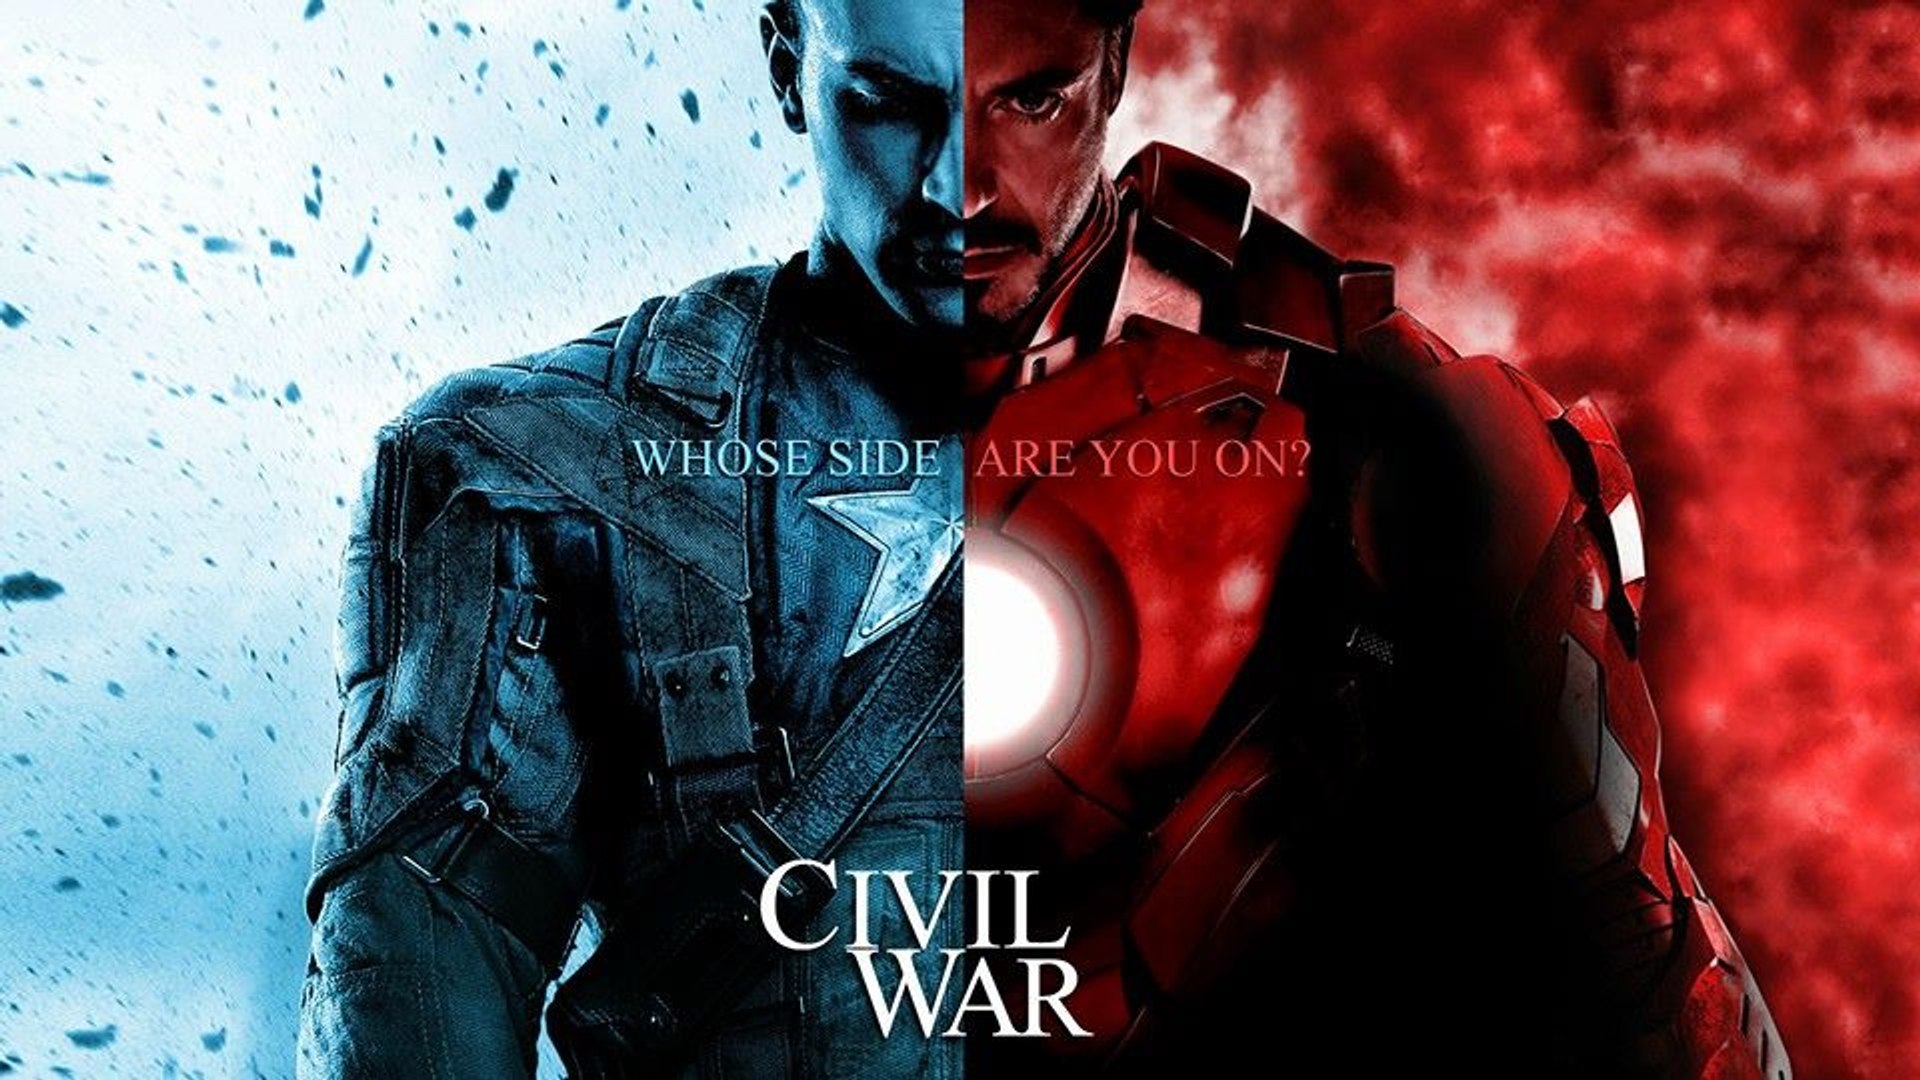 Avengers civil war free online